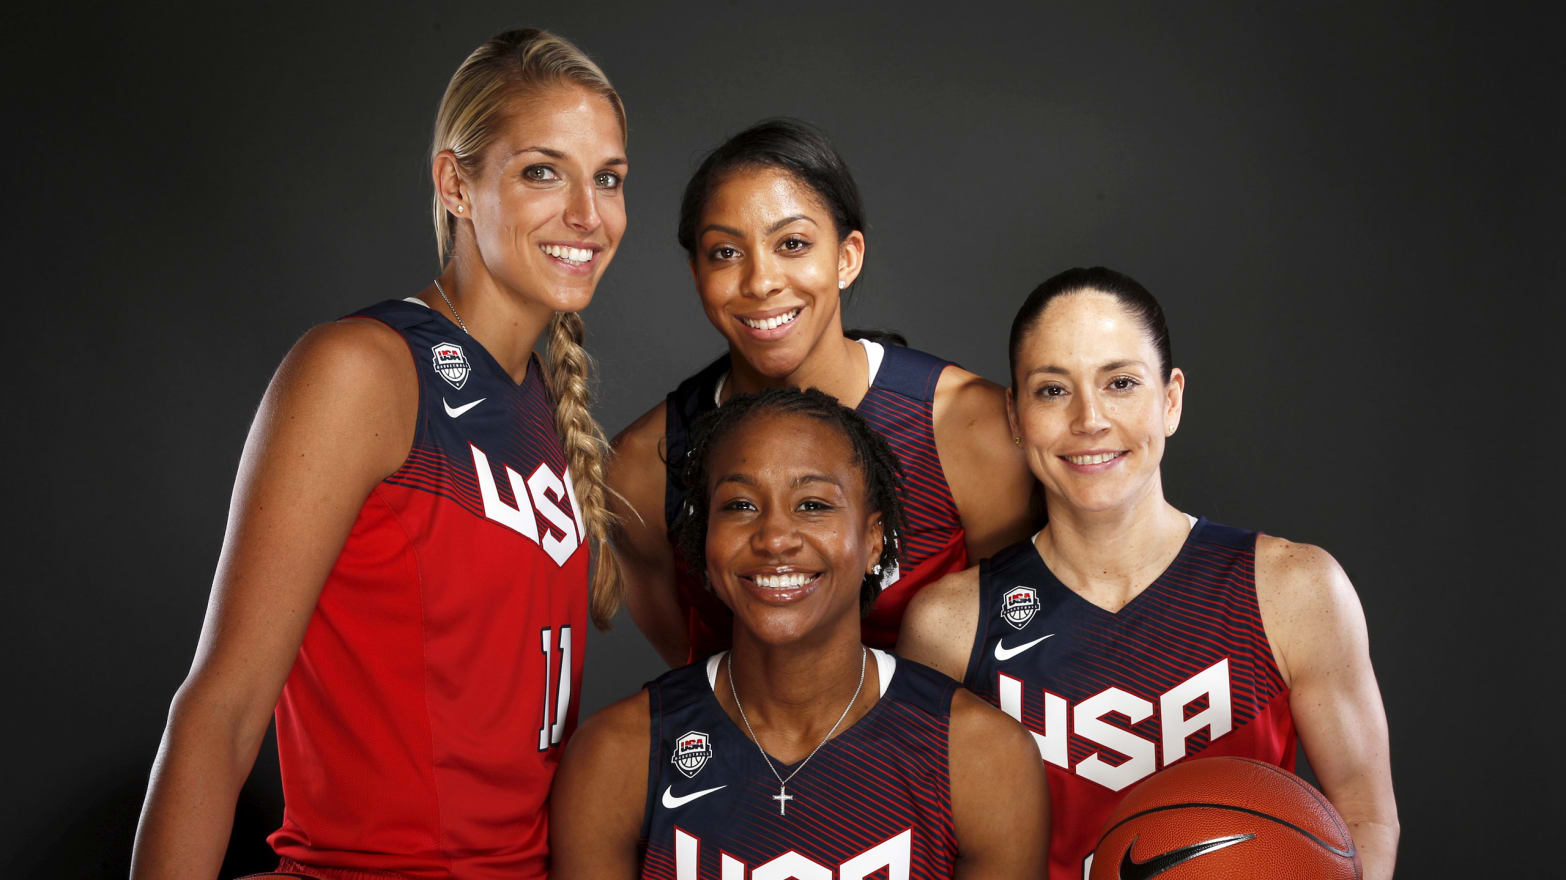 Rio Olympics 16 How To Watch Usa Women S Basketball Live Stream Online